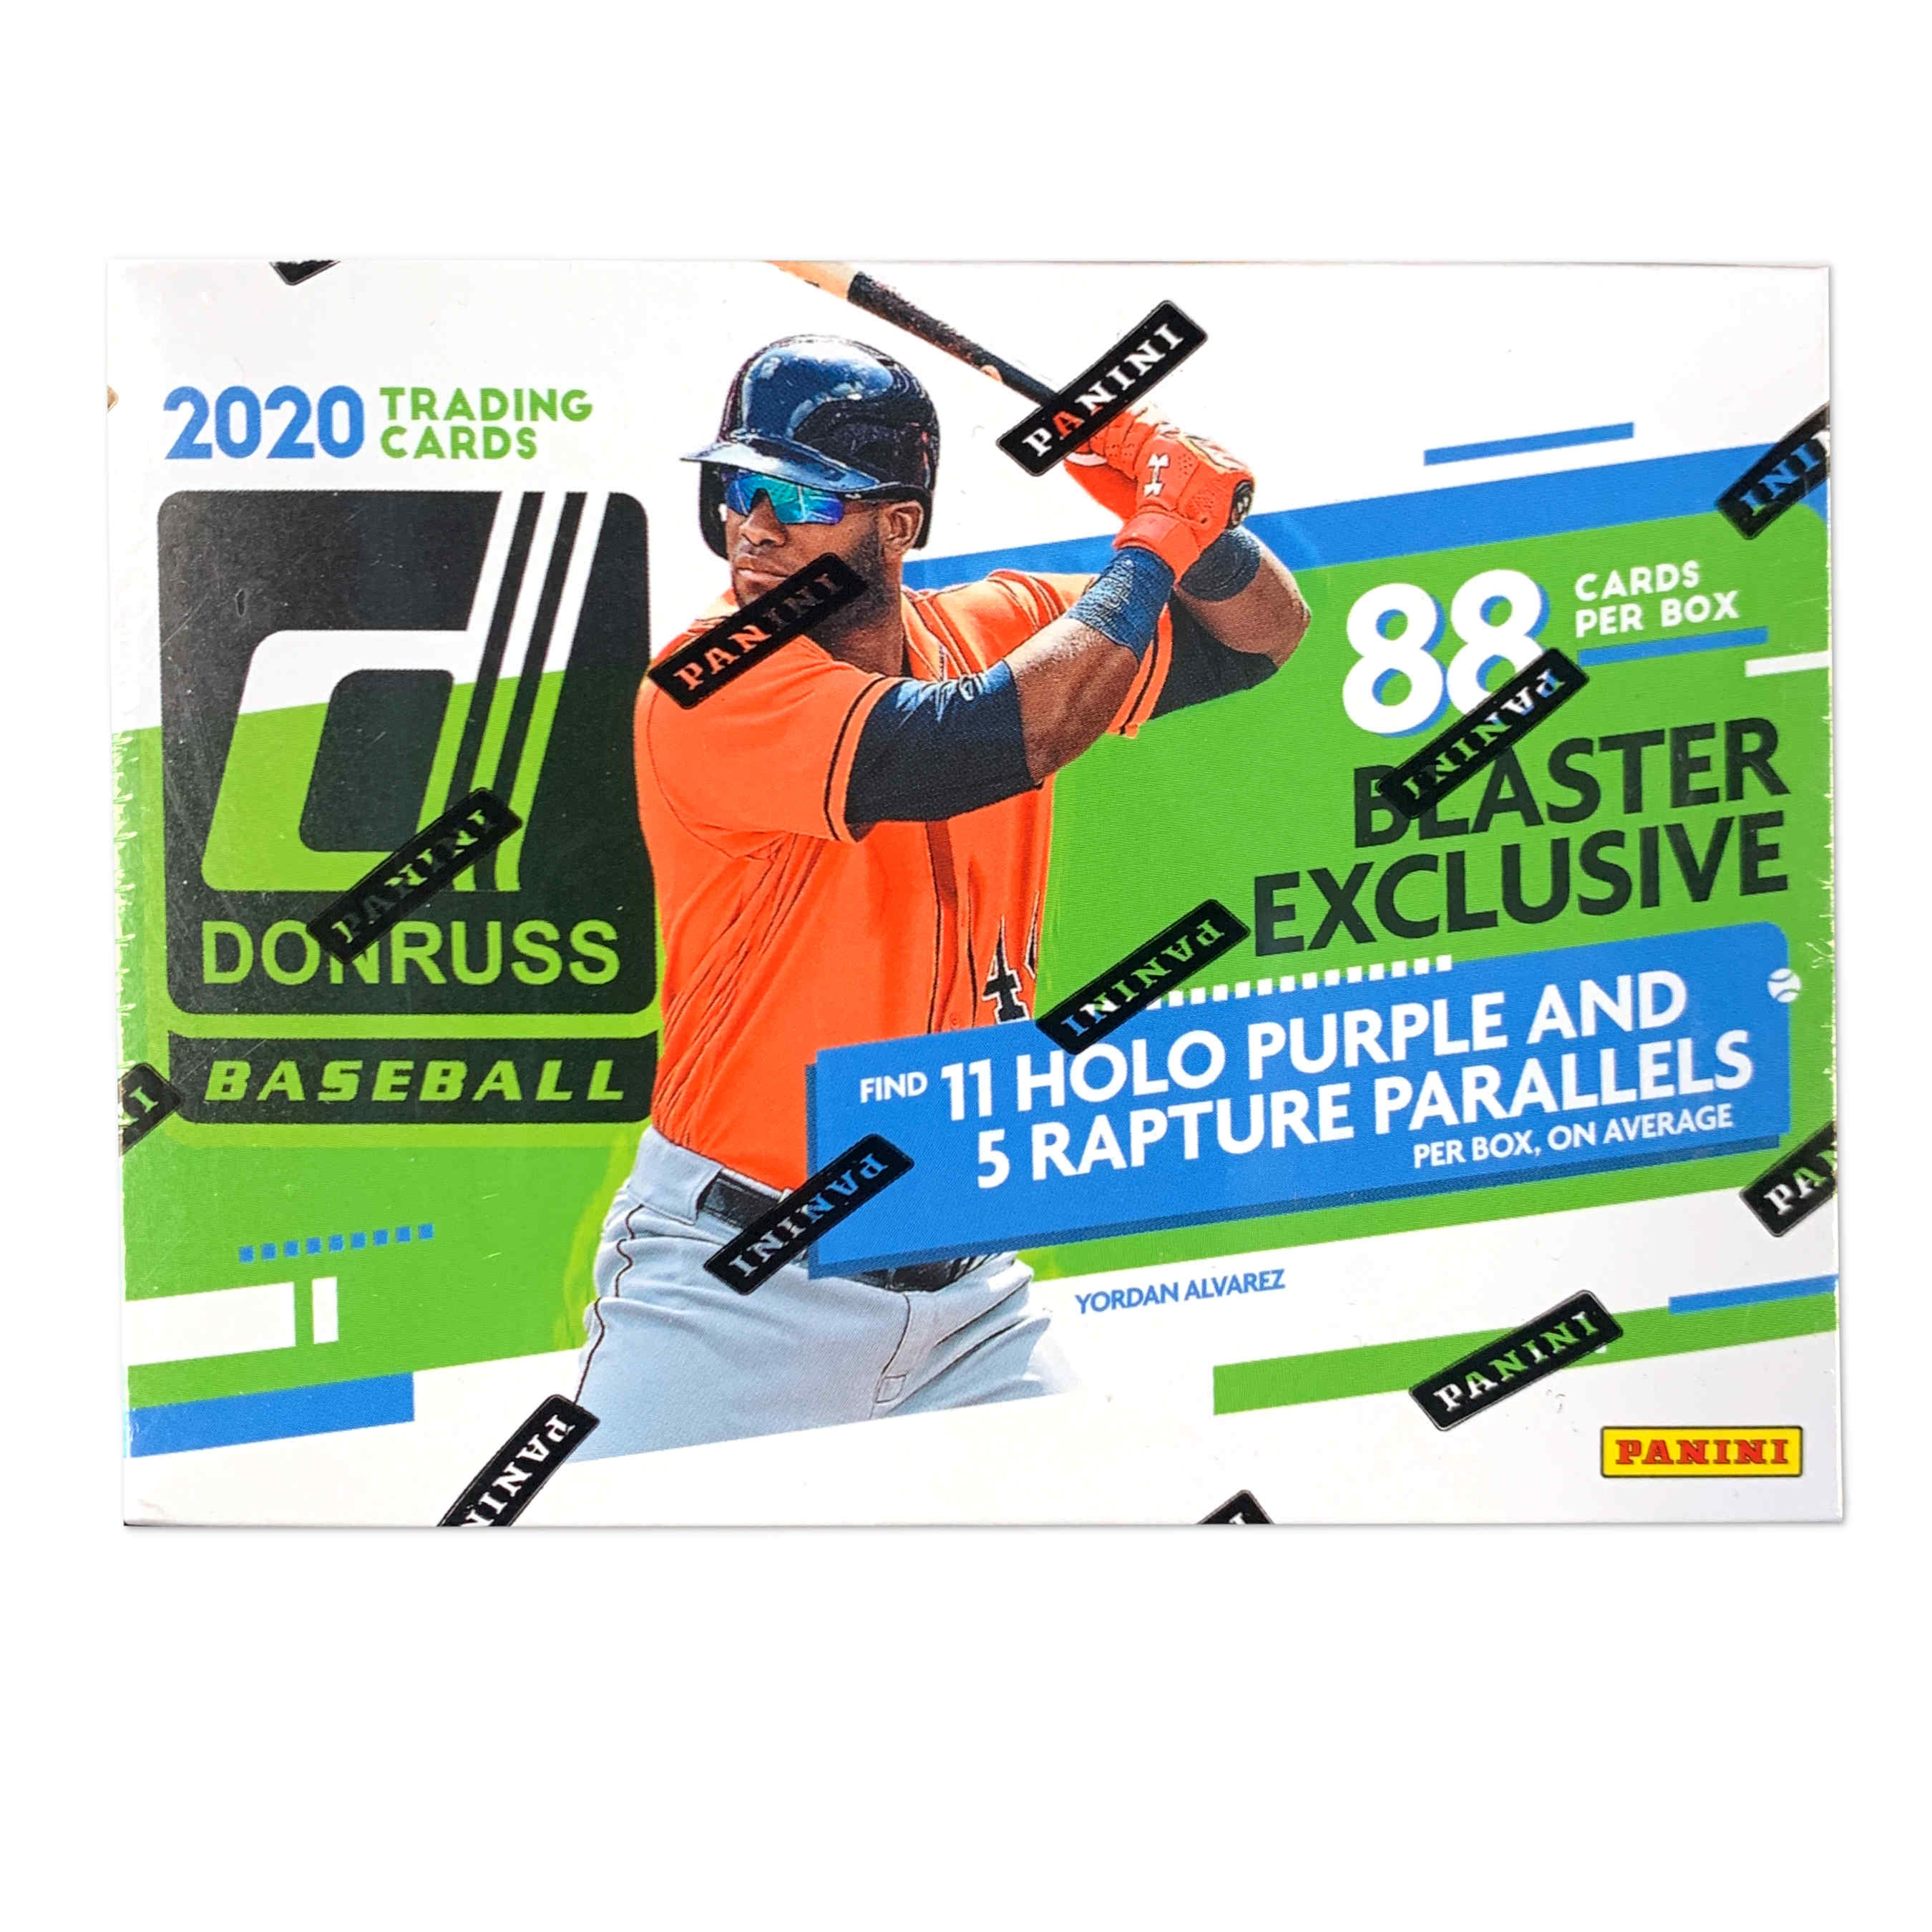 2020 Panini Donruss Baseball Blaster Box- 88 cards Per Box | 11 Holo and 5 Rapture Parallels - image 1 of 2